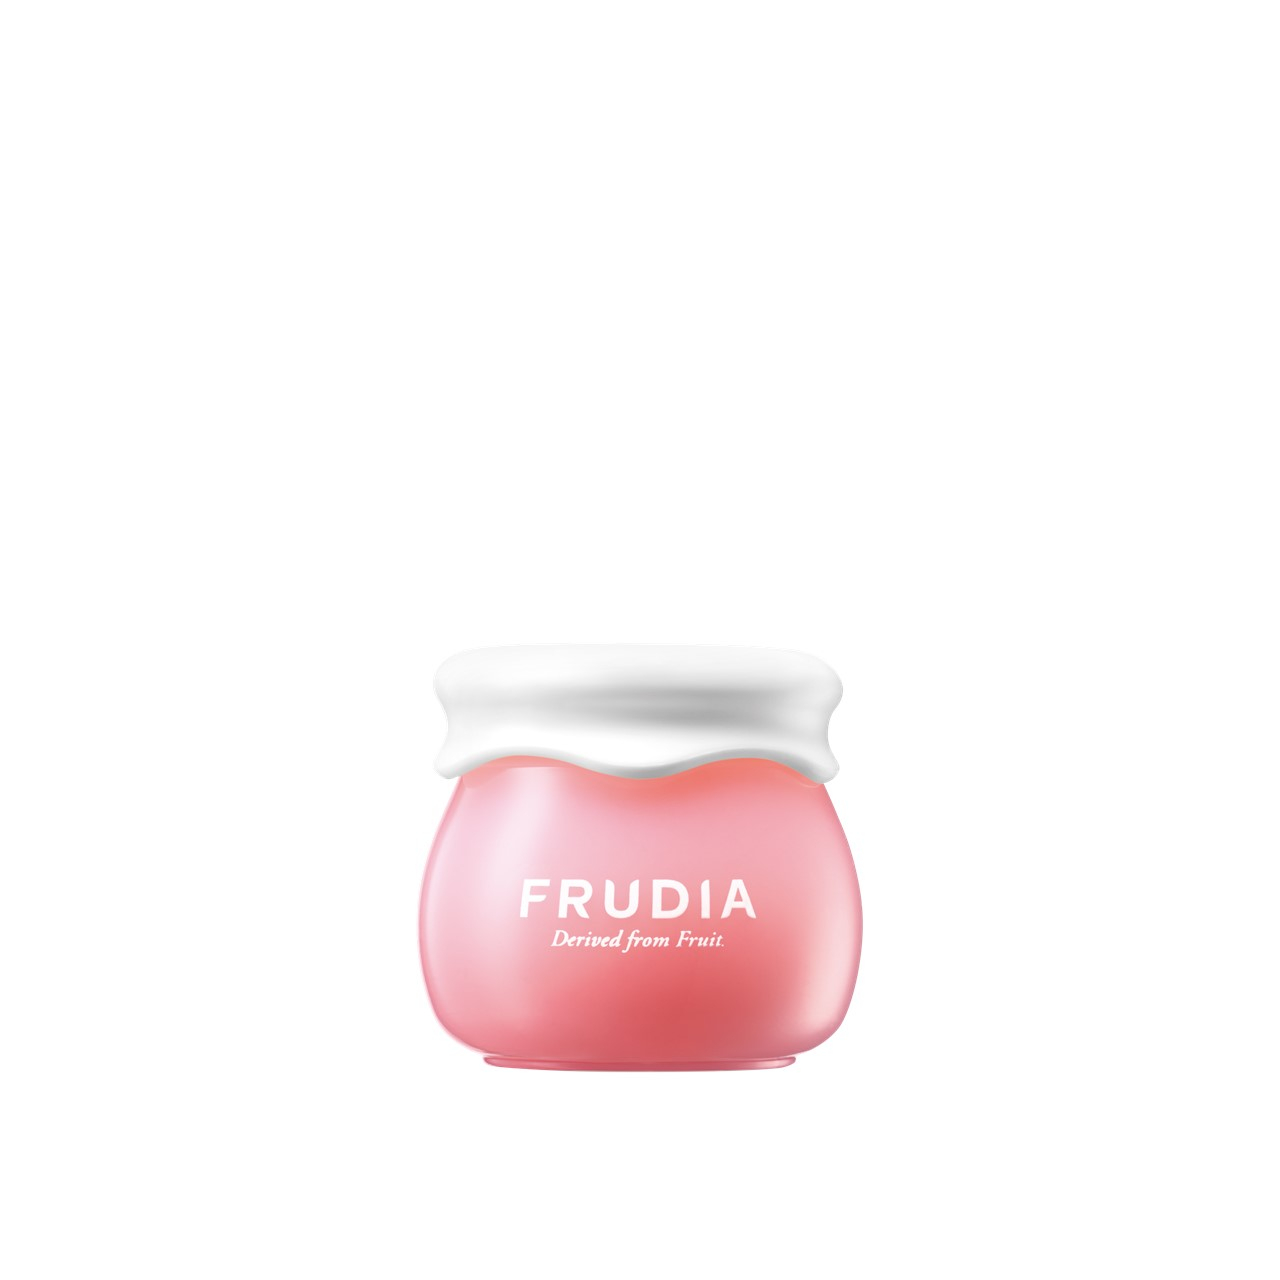 Frudia Pomegranate Nutri-Moisturizing Cream 10g (0.35 oz)